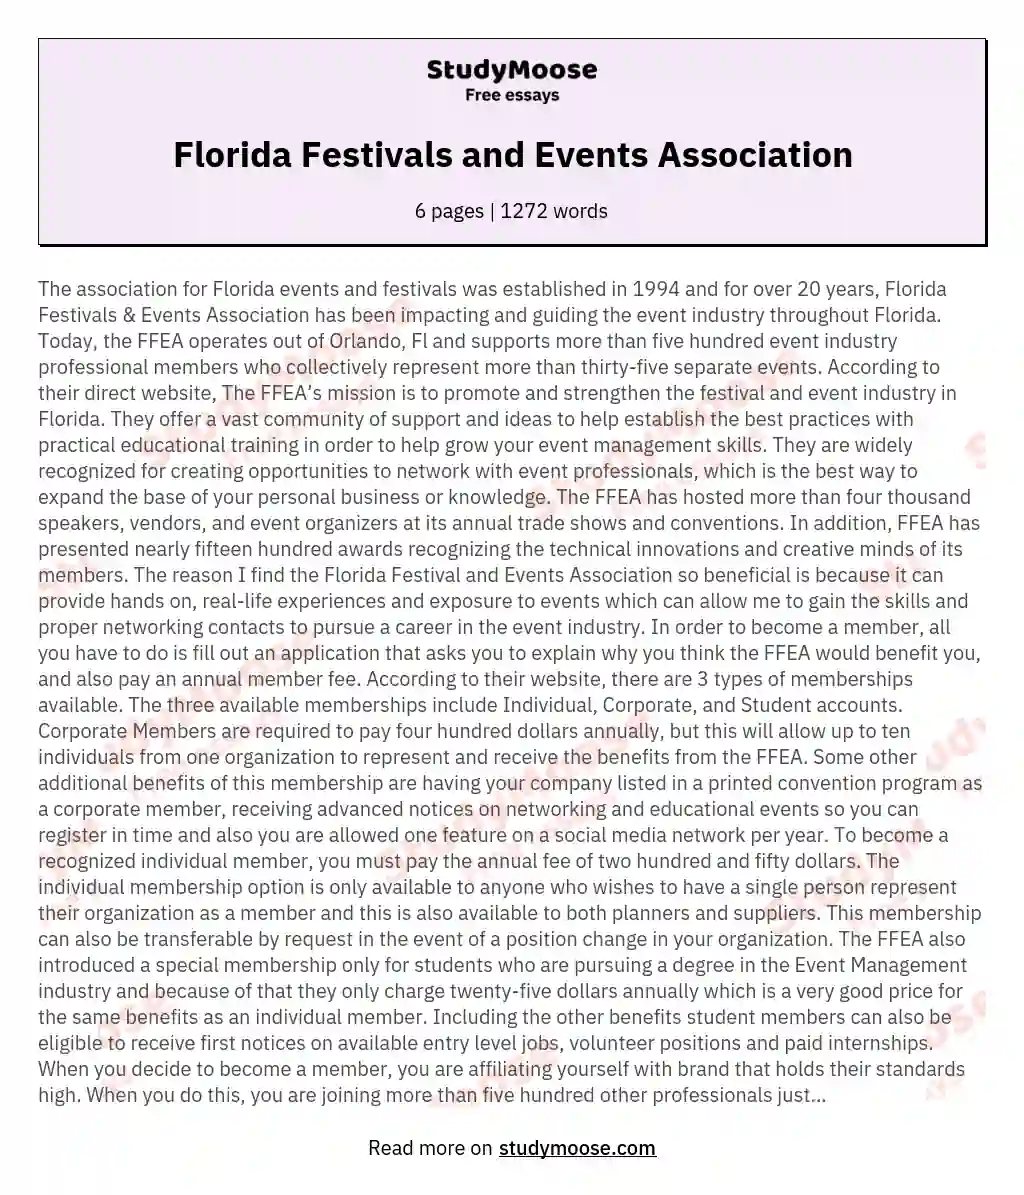 Florida Festivals and Events Association essay